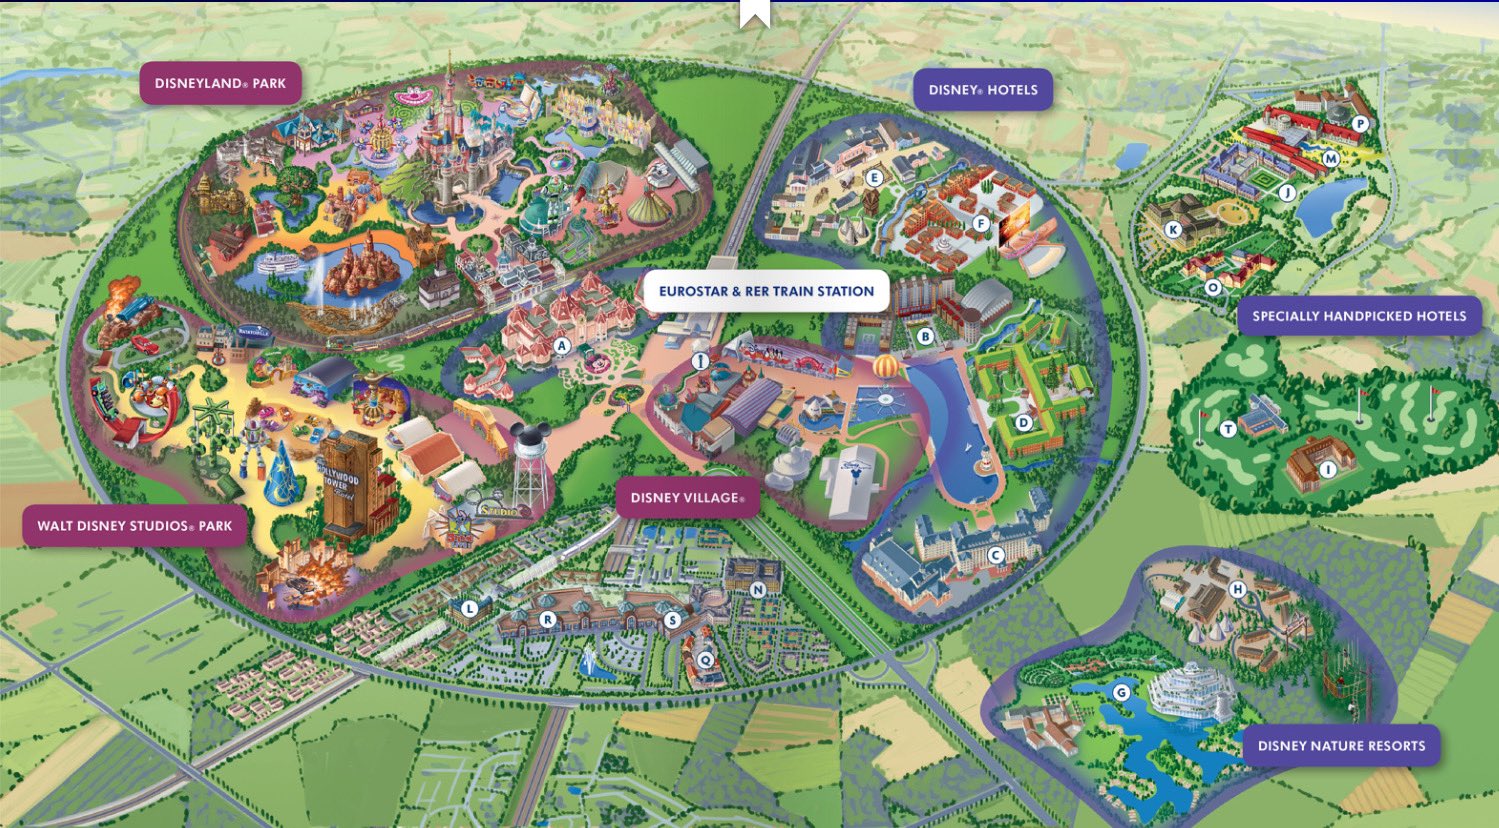 Disneyland Paris Map 2020